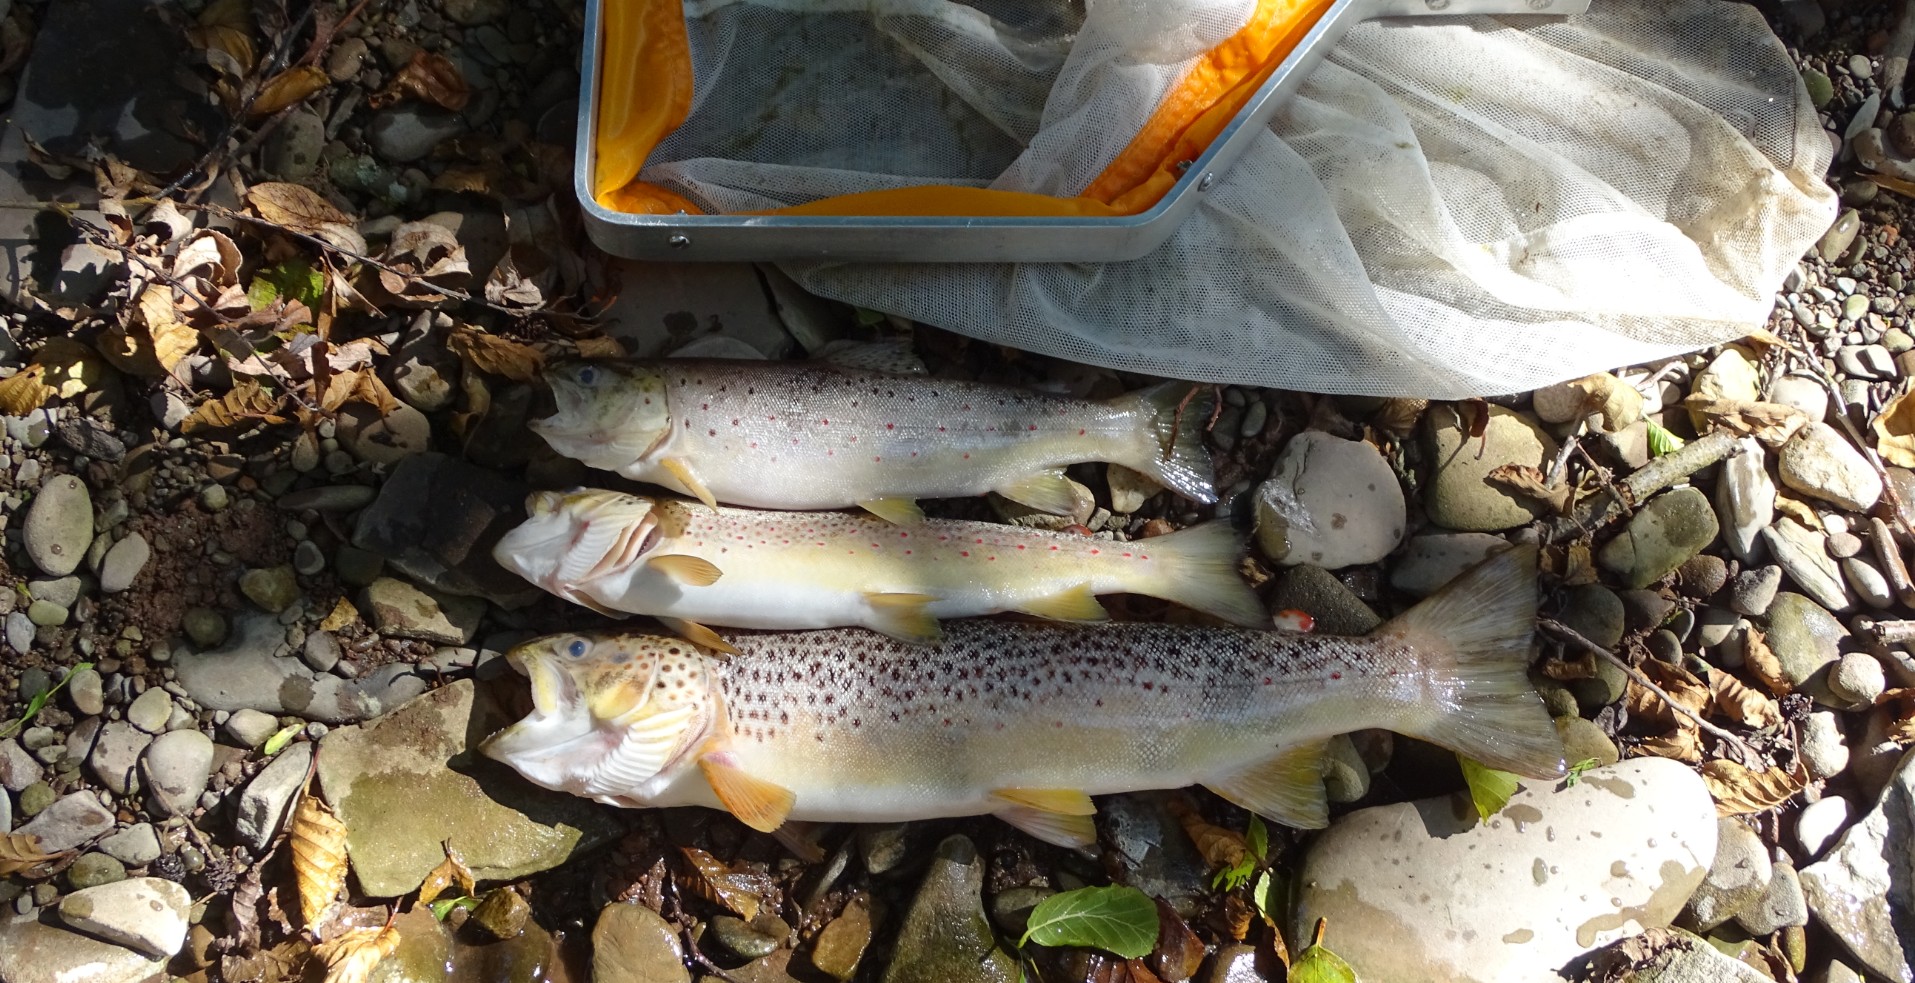 Afon Llynfi fish kill